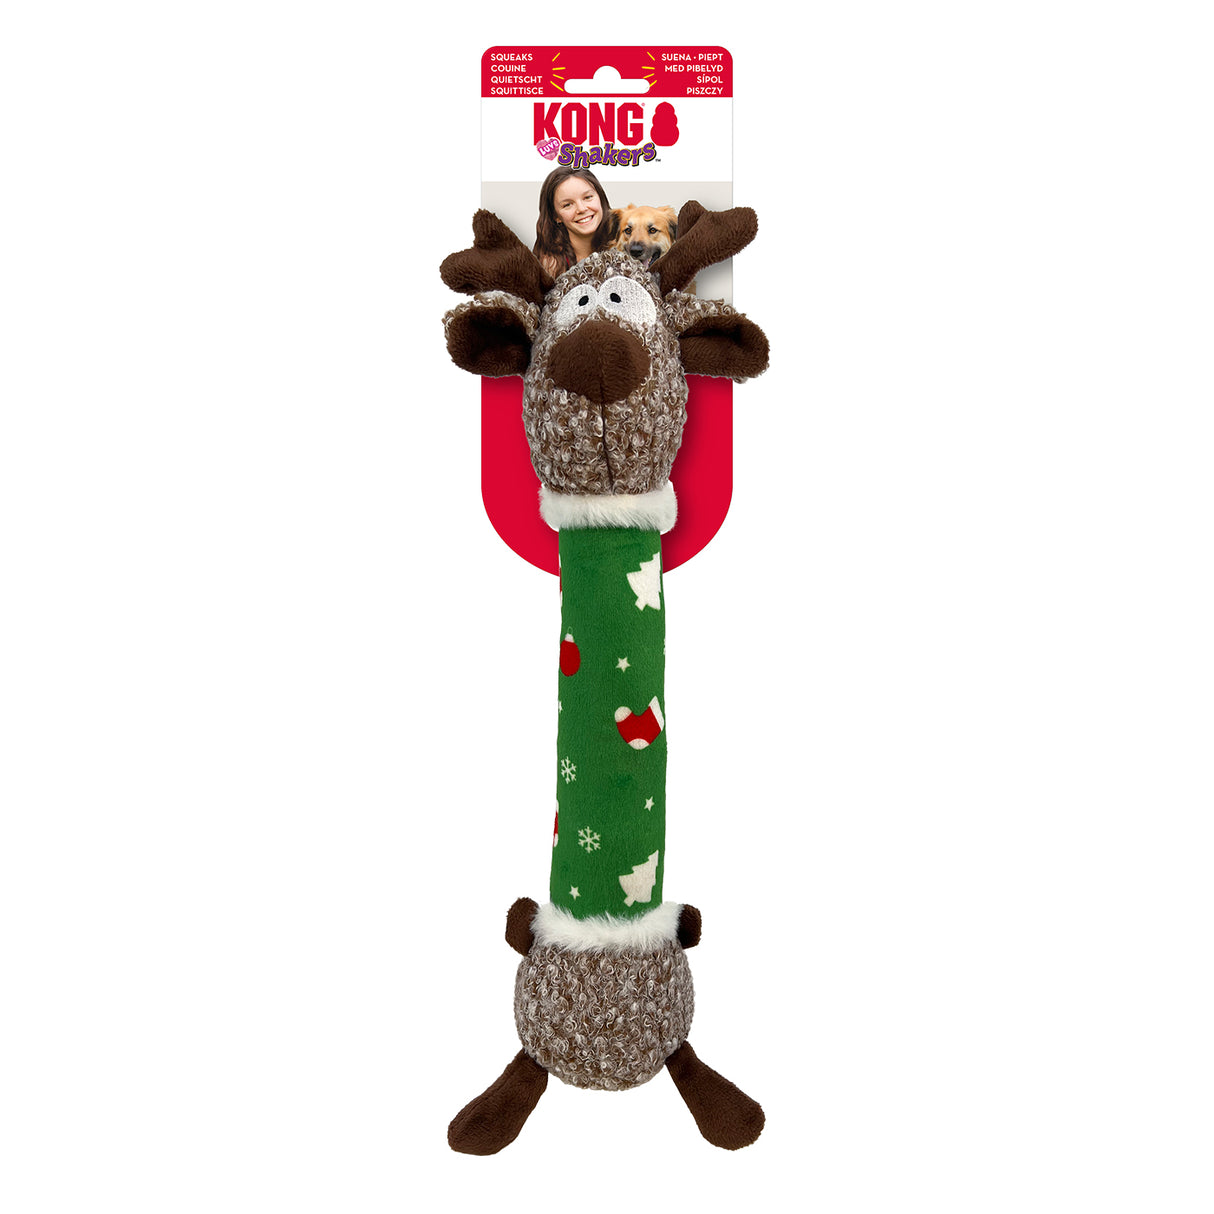 Kong Holiday Shaker aime le renne